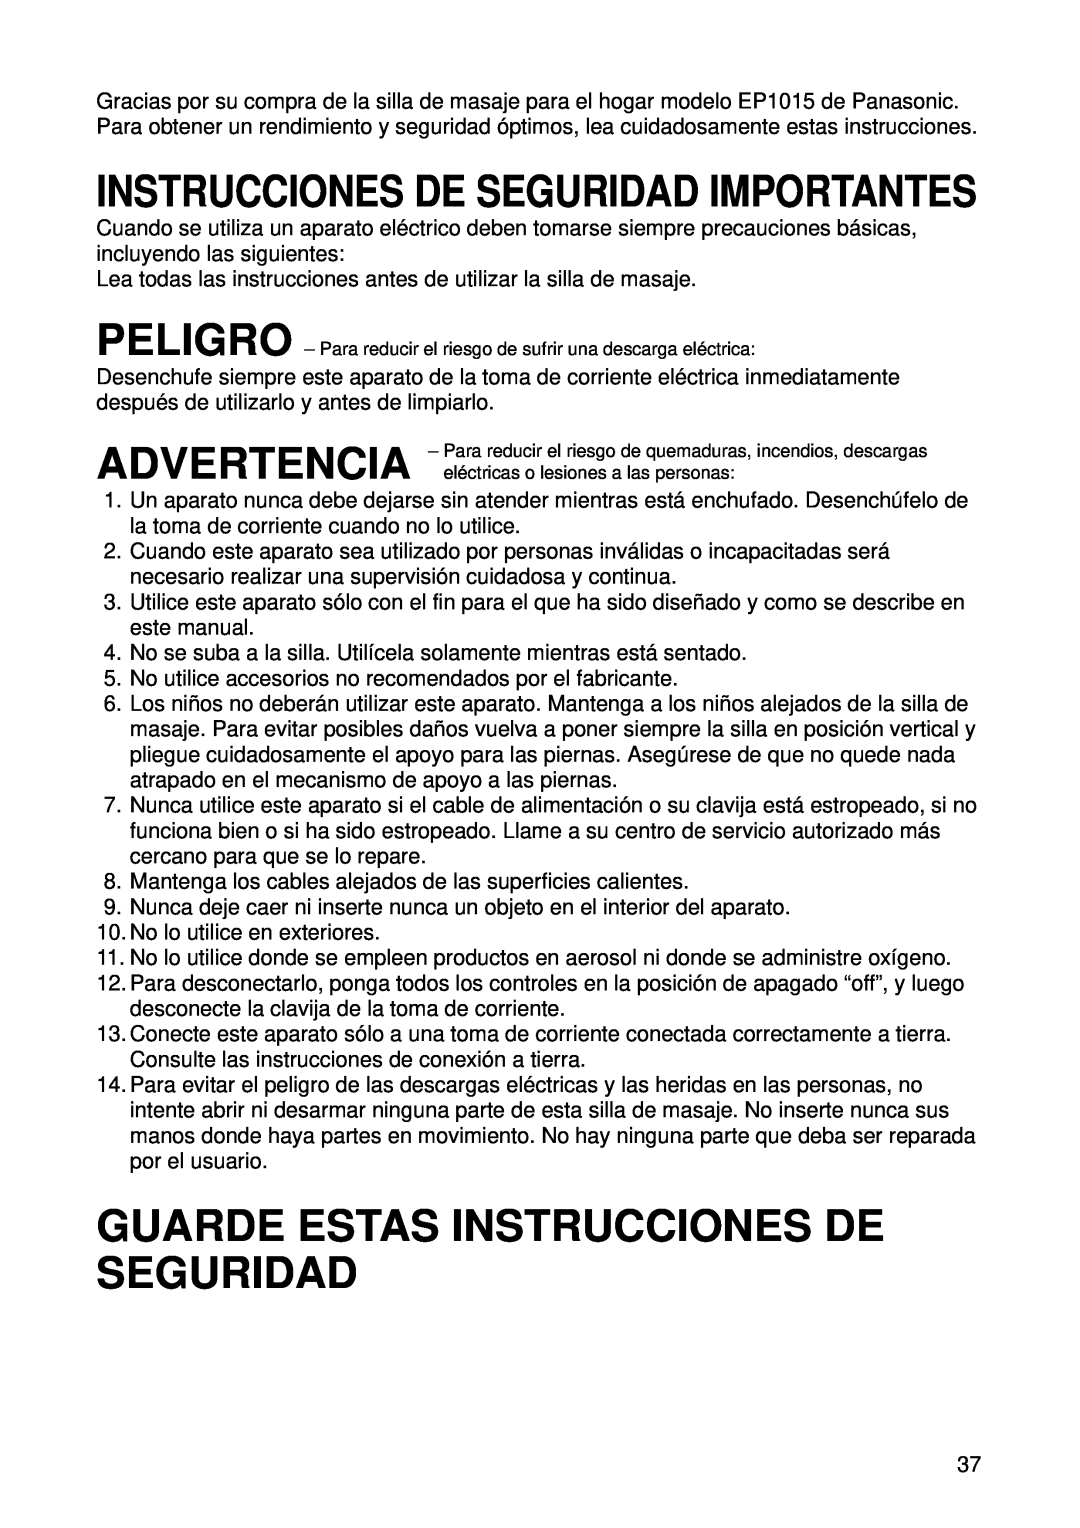 Panasonic EP1015 Advertencia, Guarde Estas Instrucciones De Seguridad, Instrucciones De Seguridad Importantes 